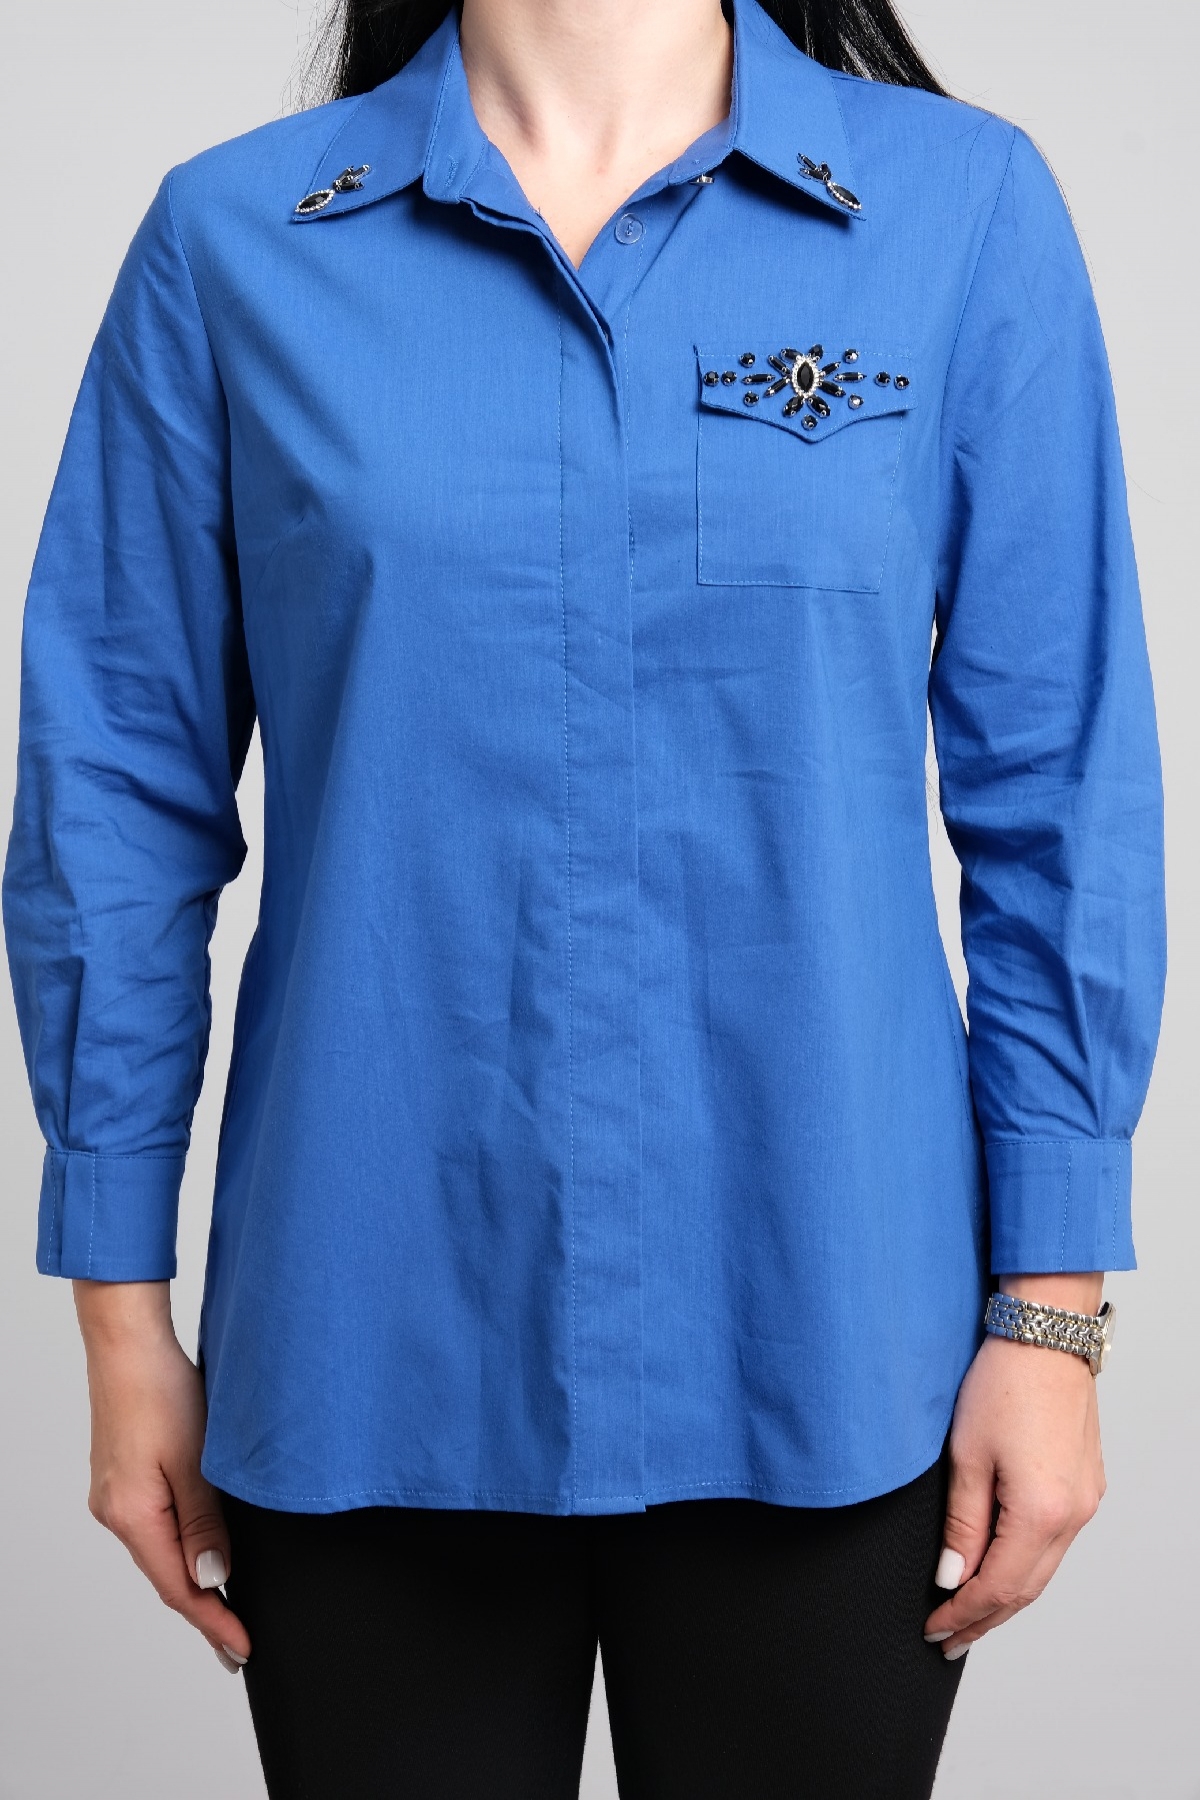 Shirt-Bright Blue